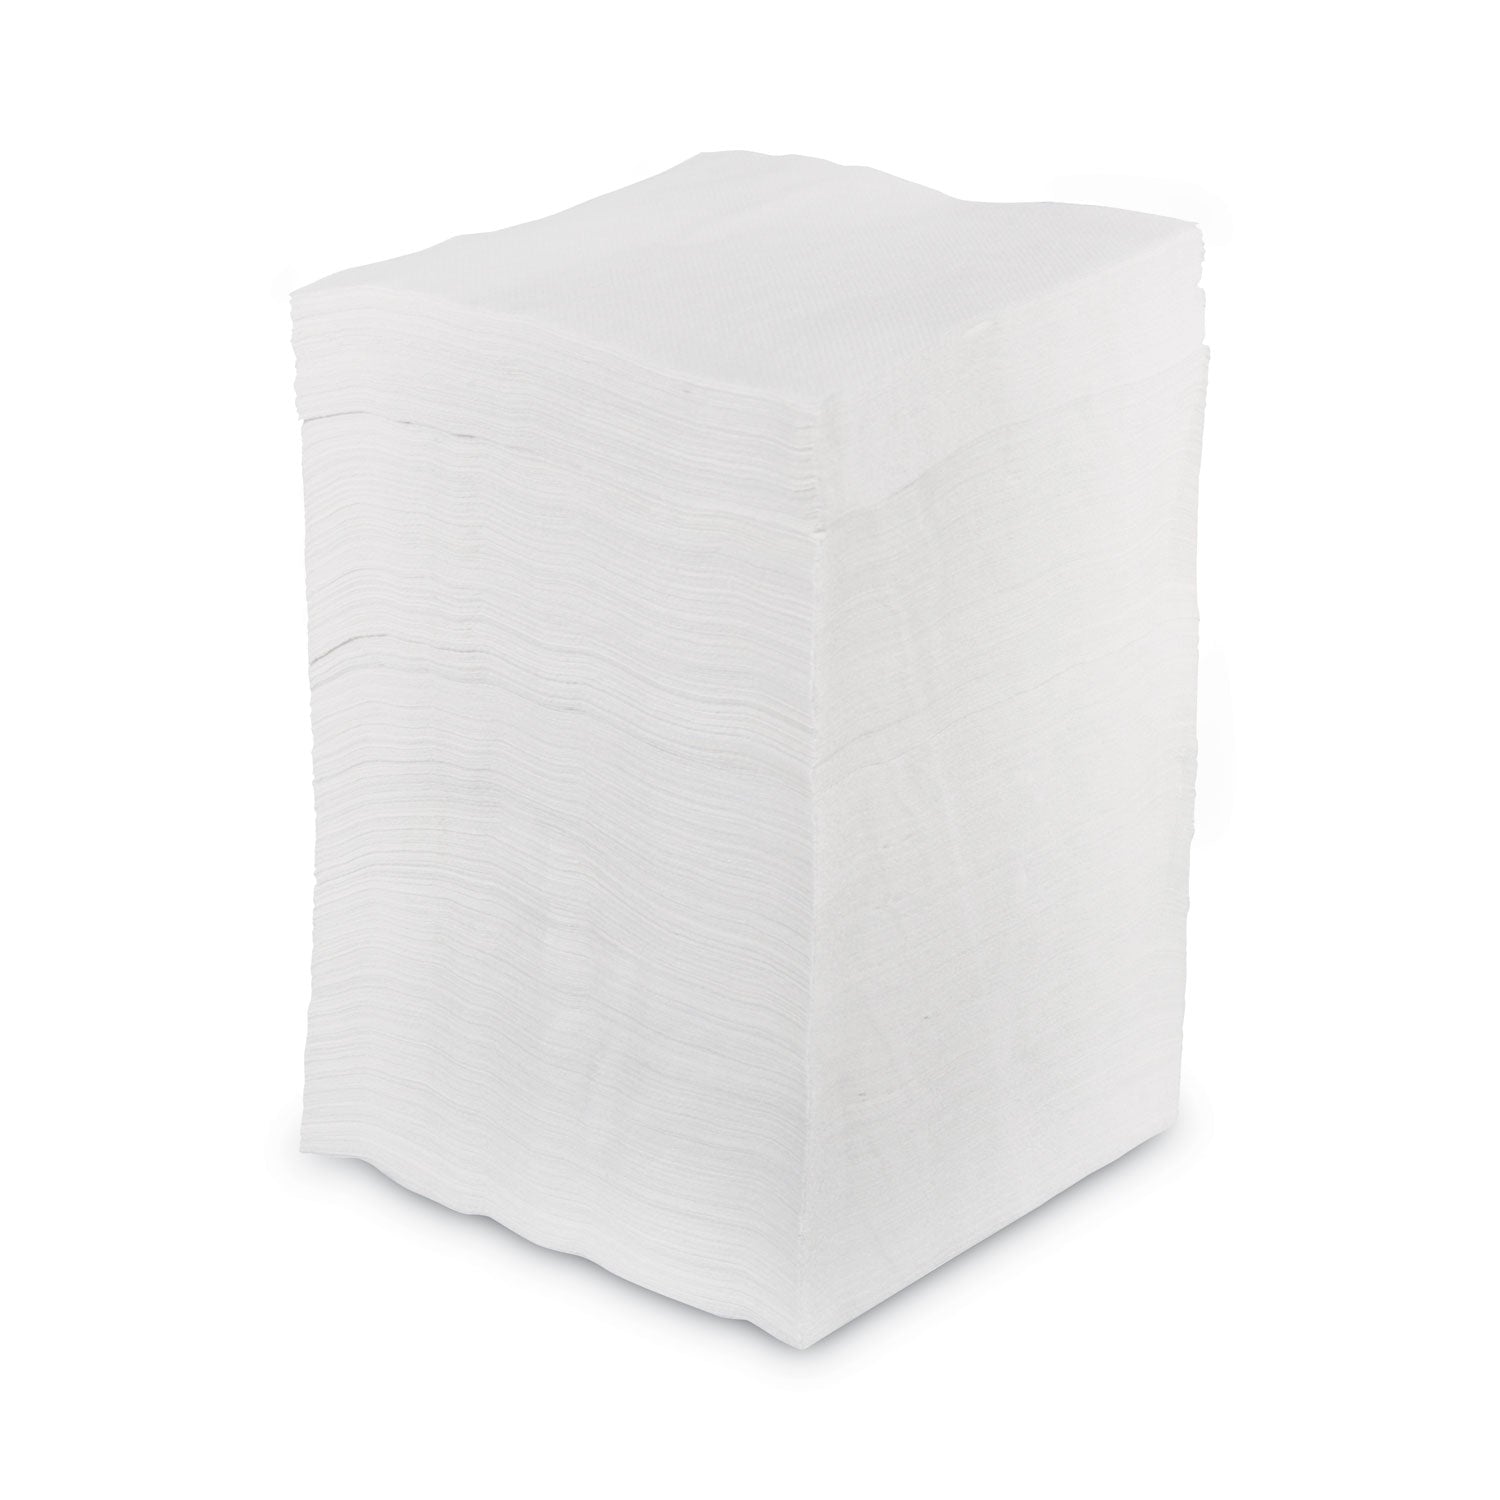 1-4-fold-lunch-napkins-1-ply-12-x-12-white-6000-carton_bwk8310w - 1